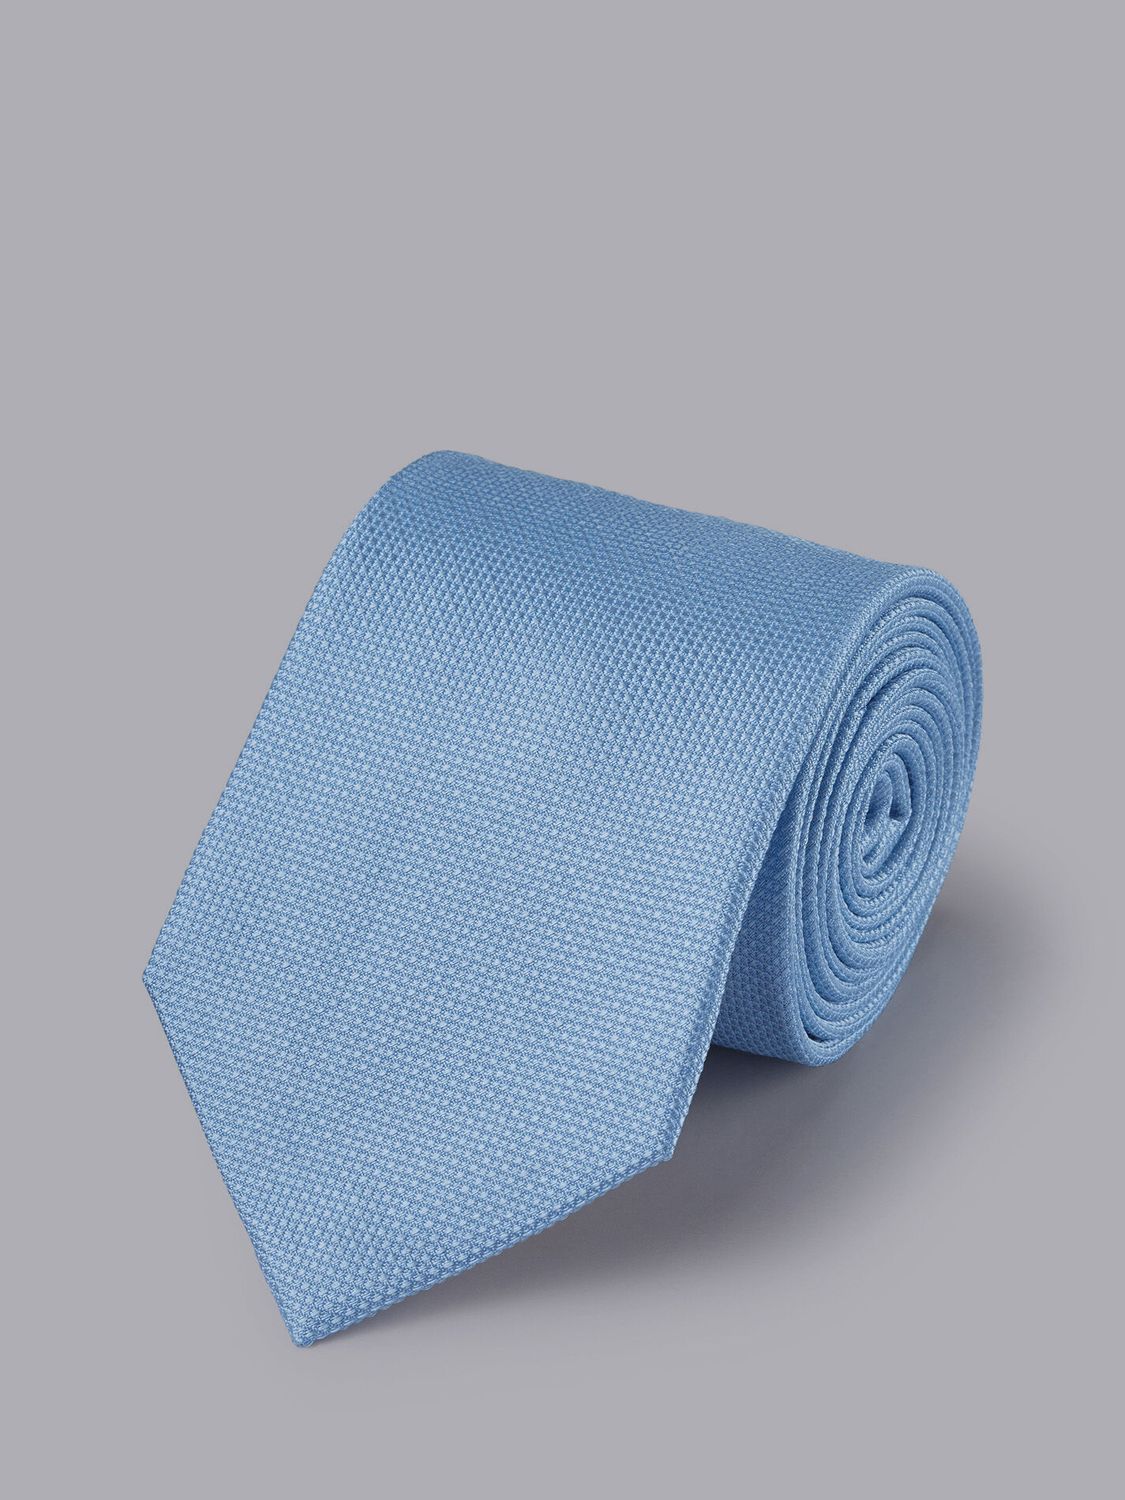 Charles Tyrwhitt Stain Resistant Silk Tie, Sky Blue, One Size